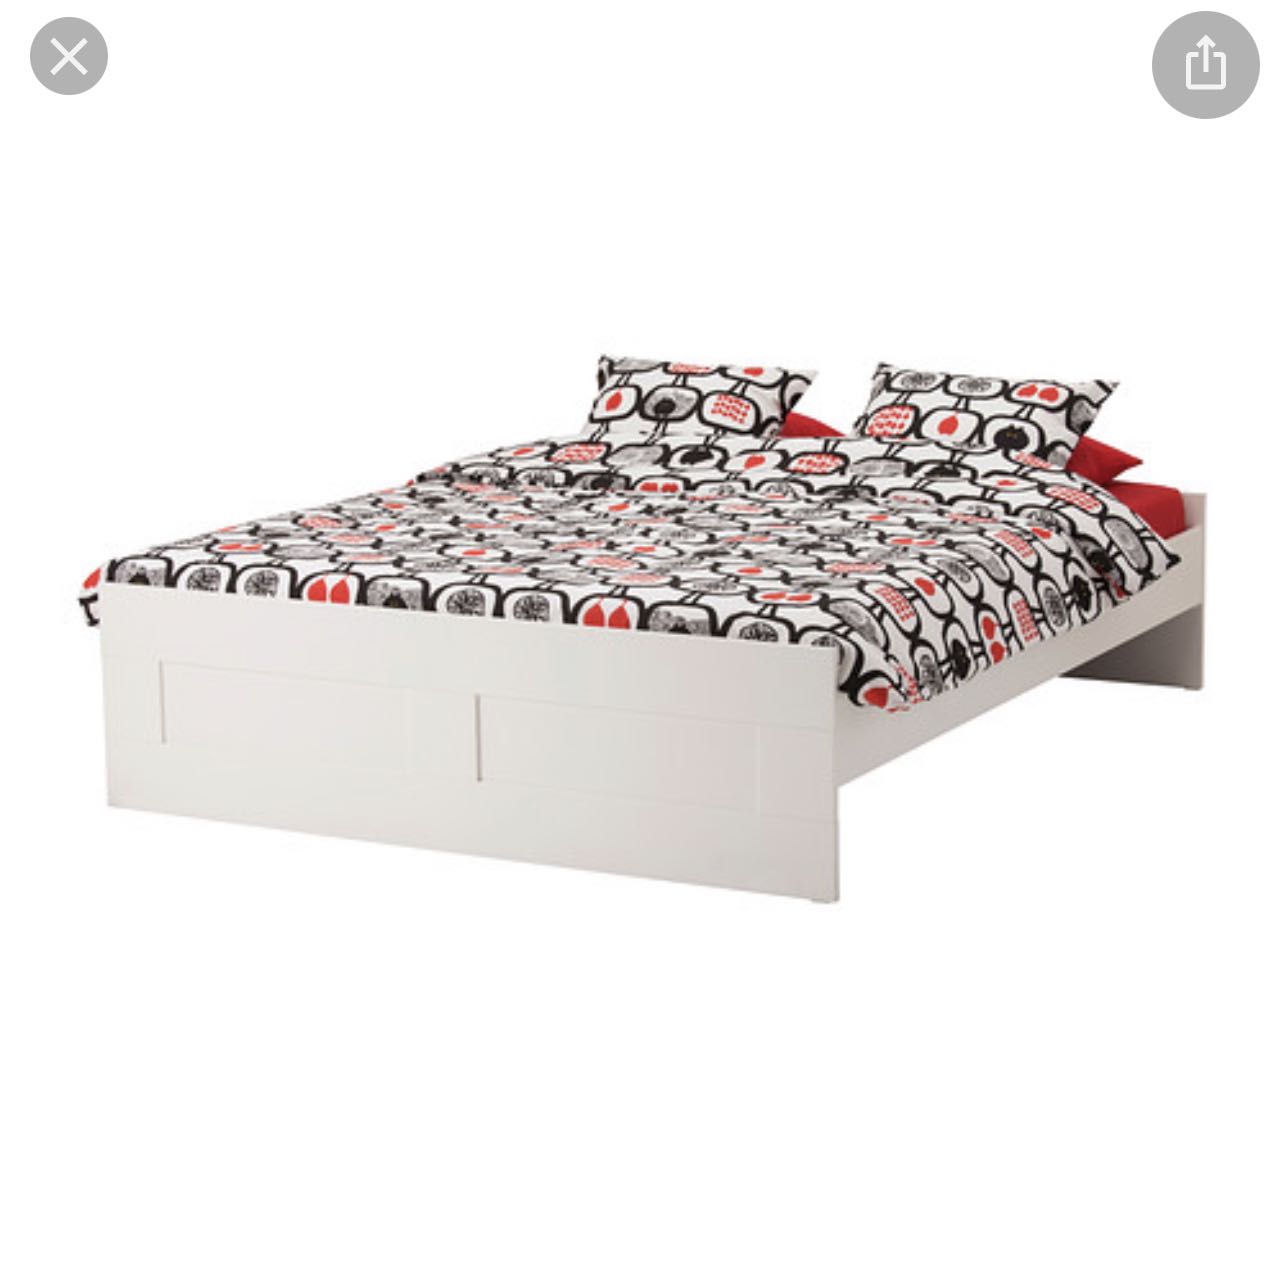 Ikea Brimnes Bed Frame Without Storage, Brimnes Bed Frame With Storage Headboard White Luröy Full